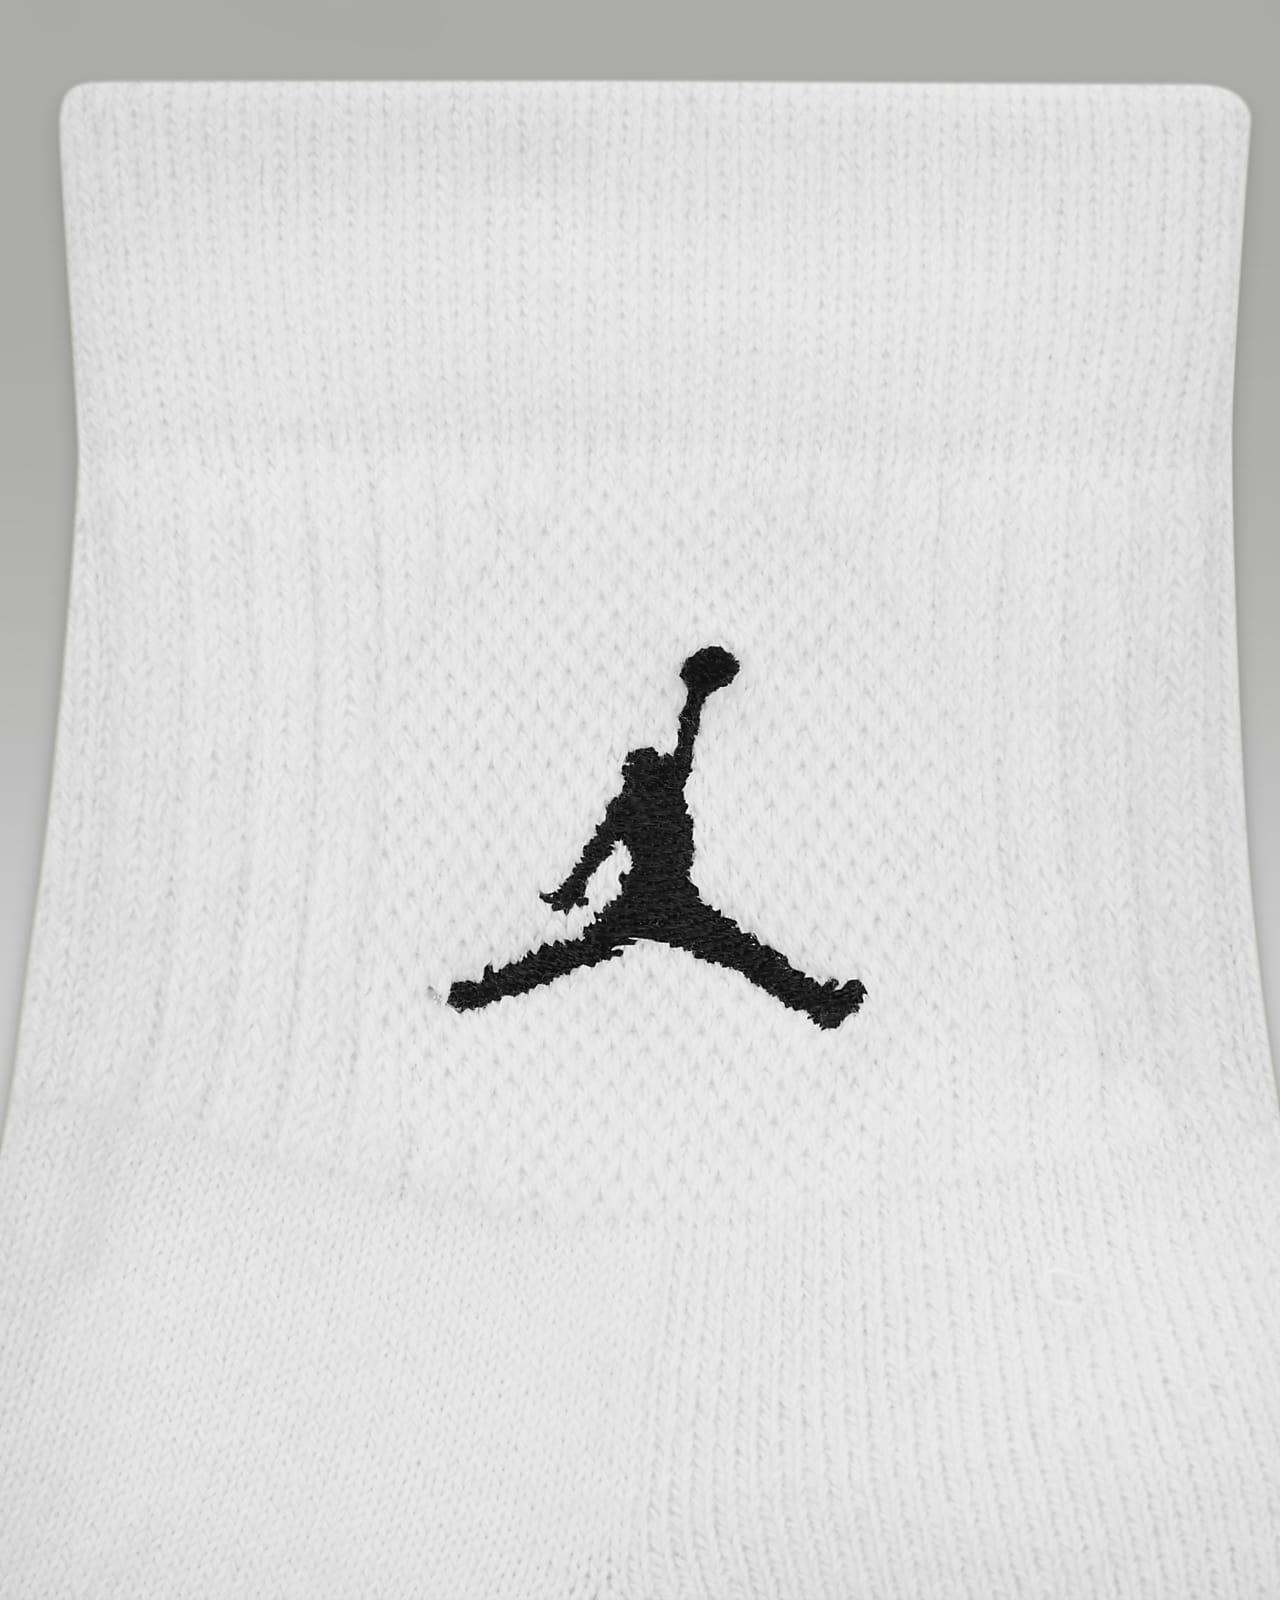 Nike Calcetines - Jordan Everyday Ankle (3 Pares) - blanco/negro DX9655-100